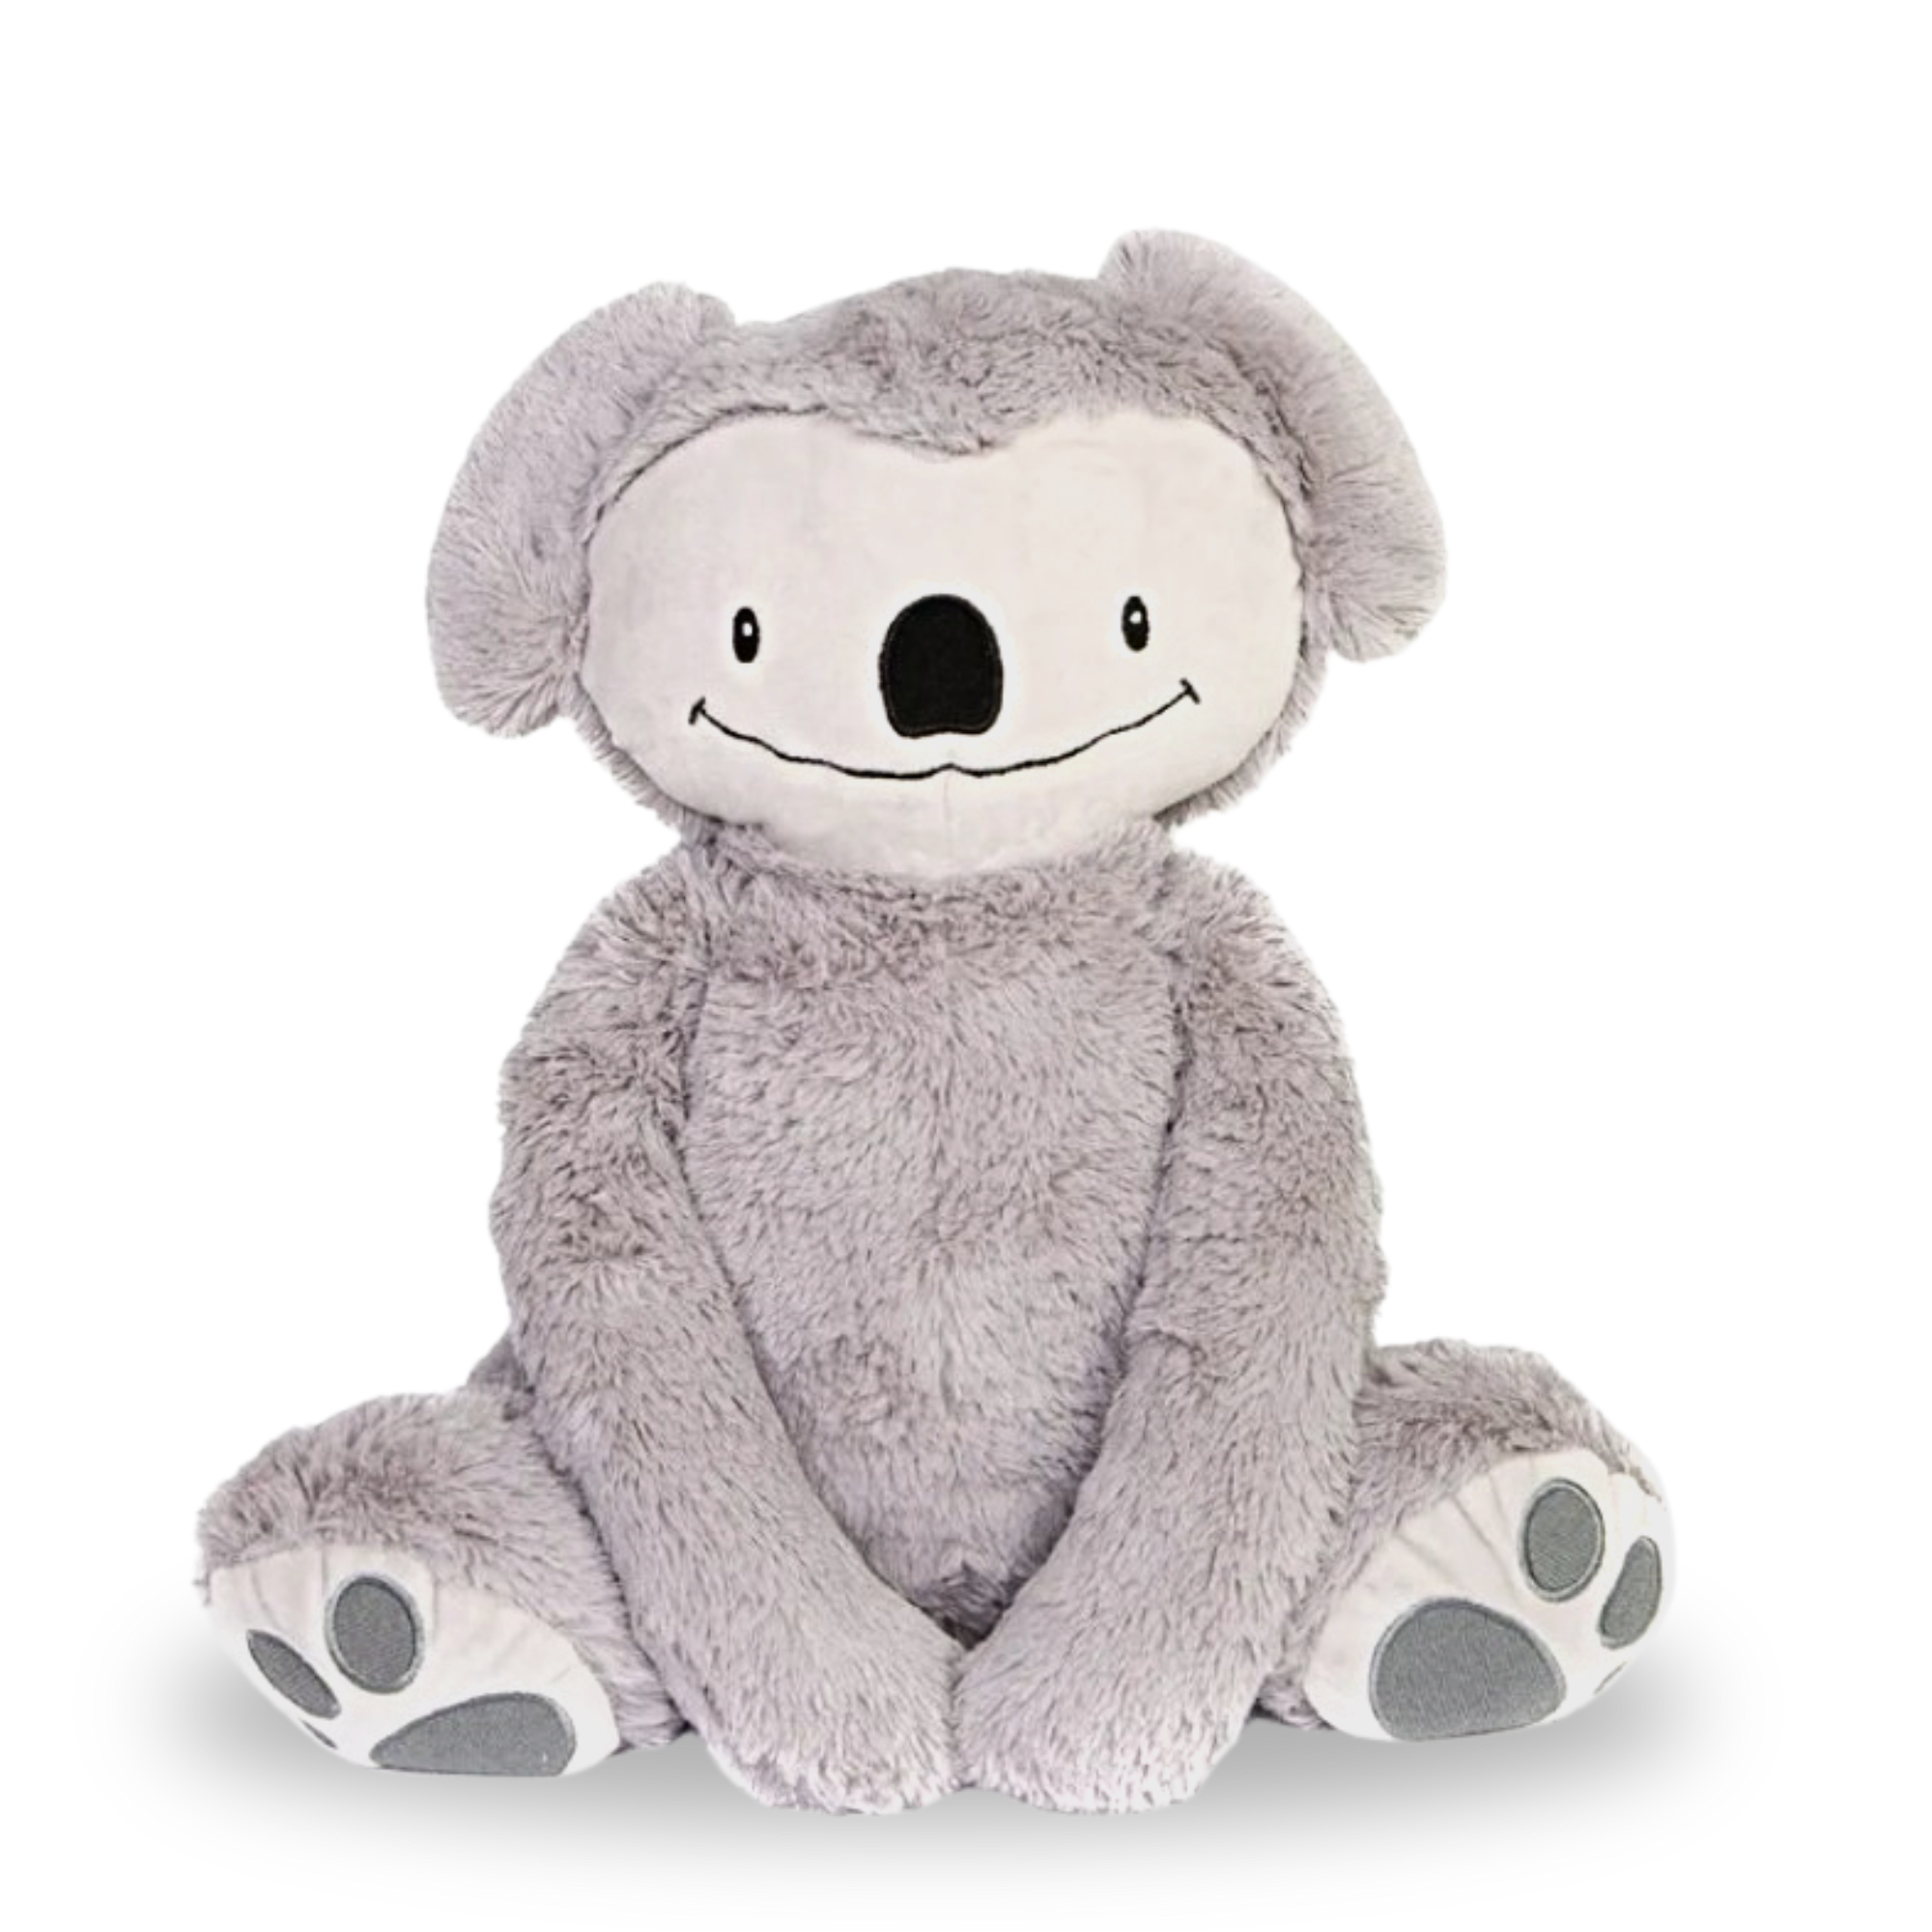 Calming Coco Koala - Extra large 40cm weighted sensory plush toy